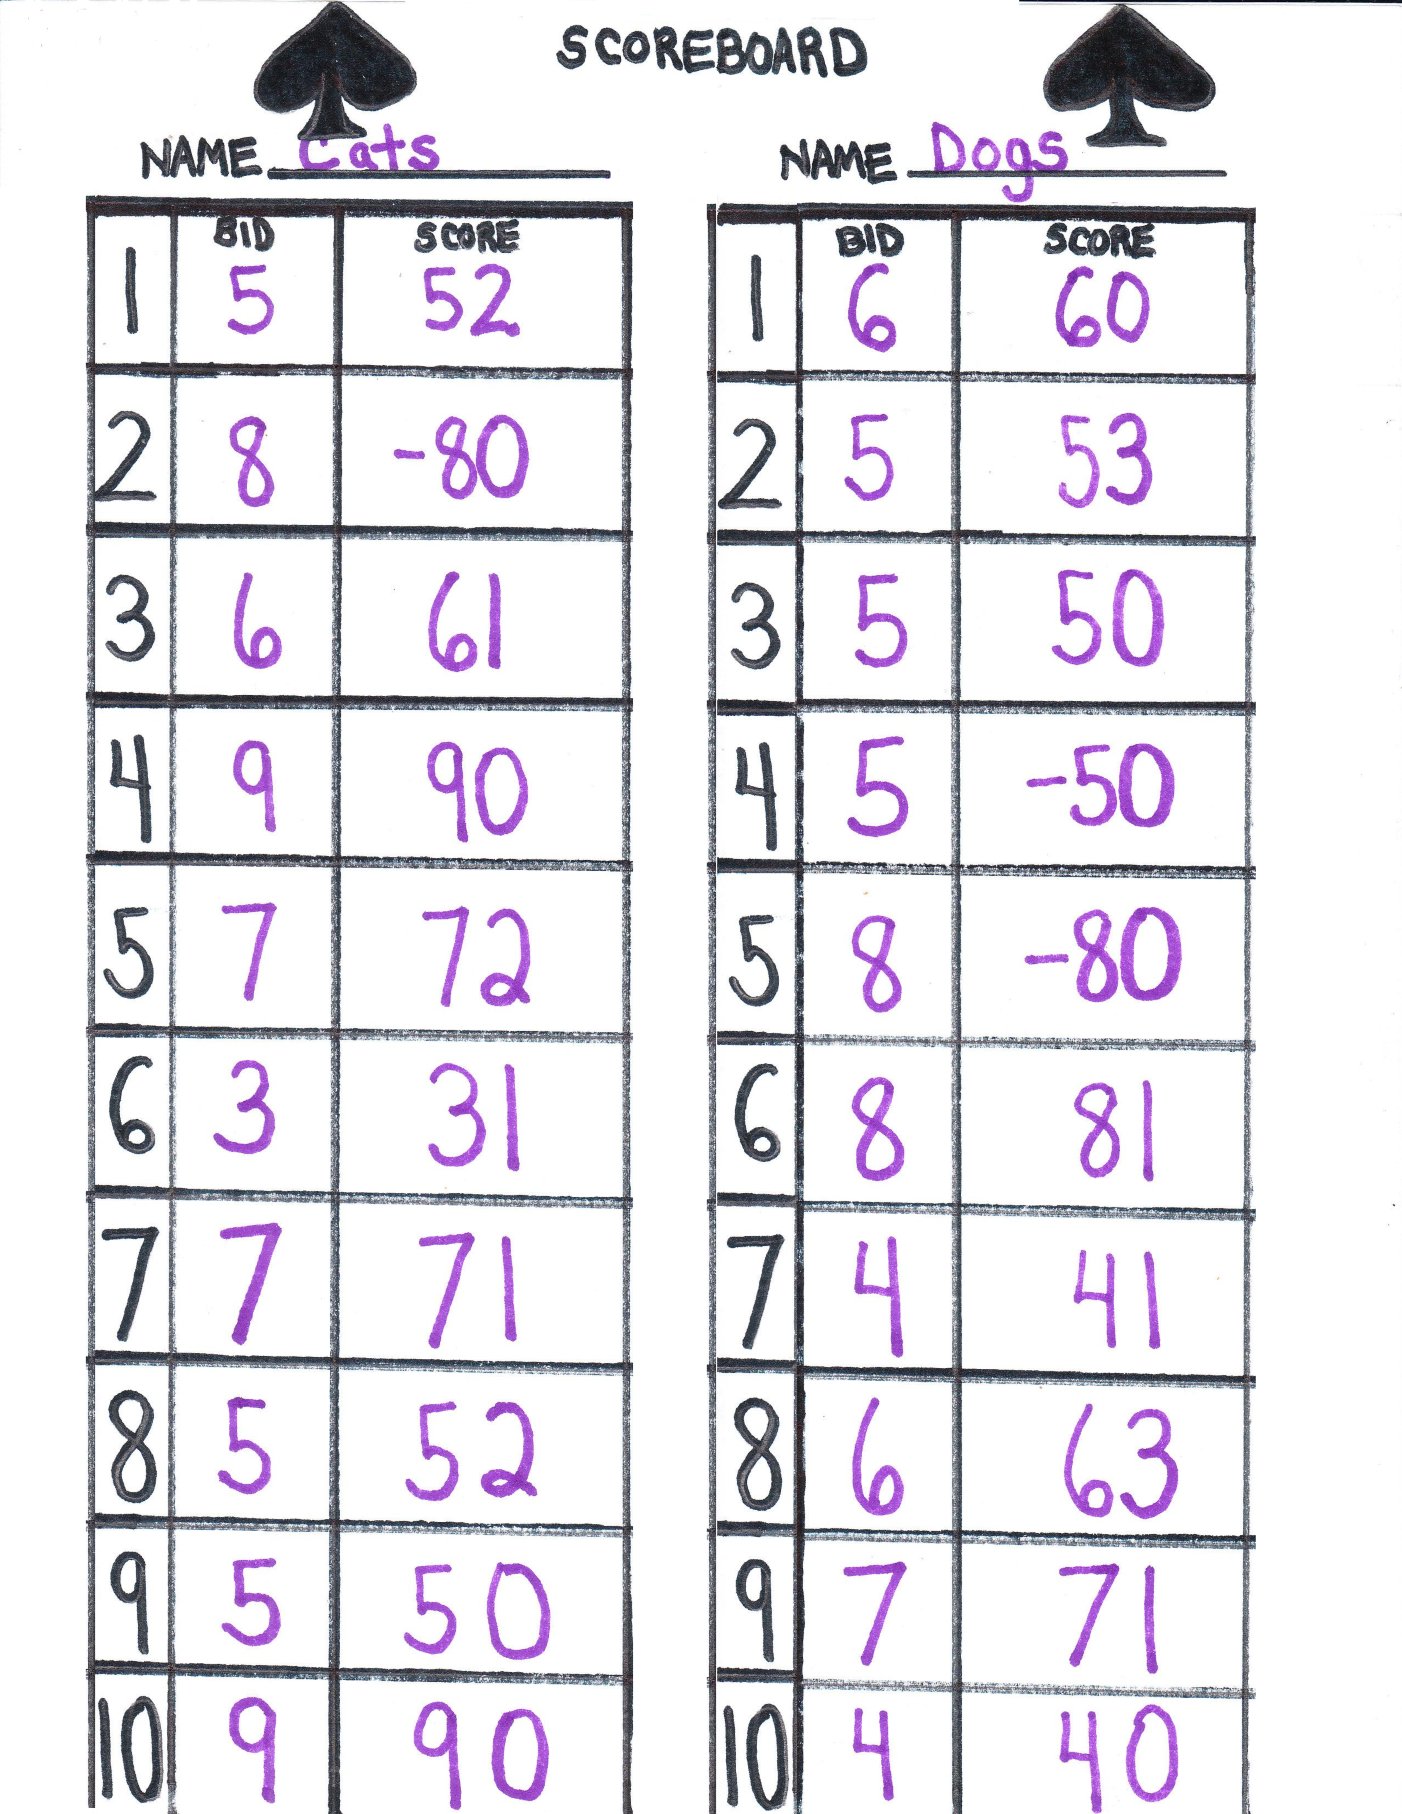 Example card game score sheet